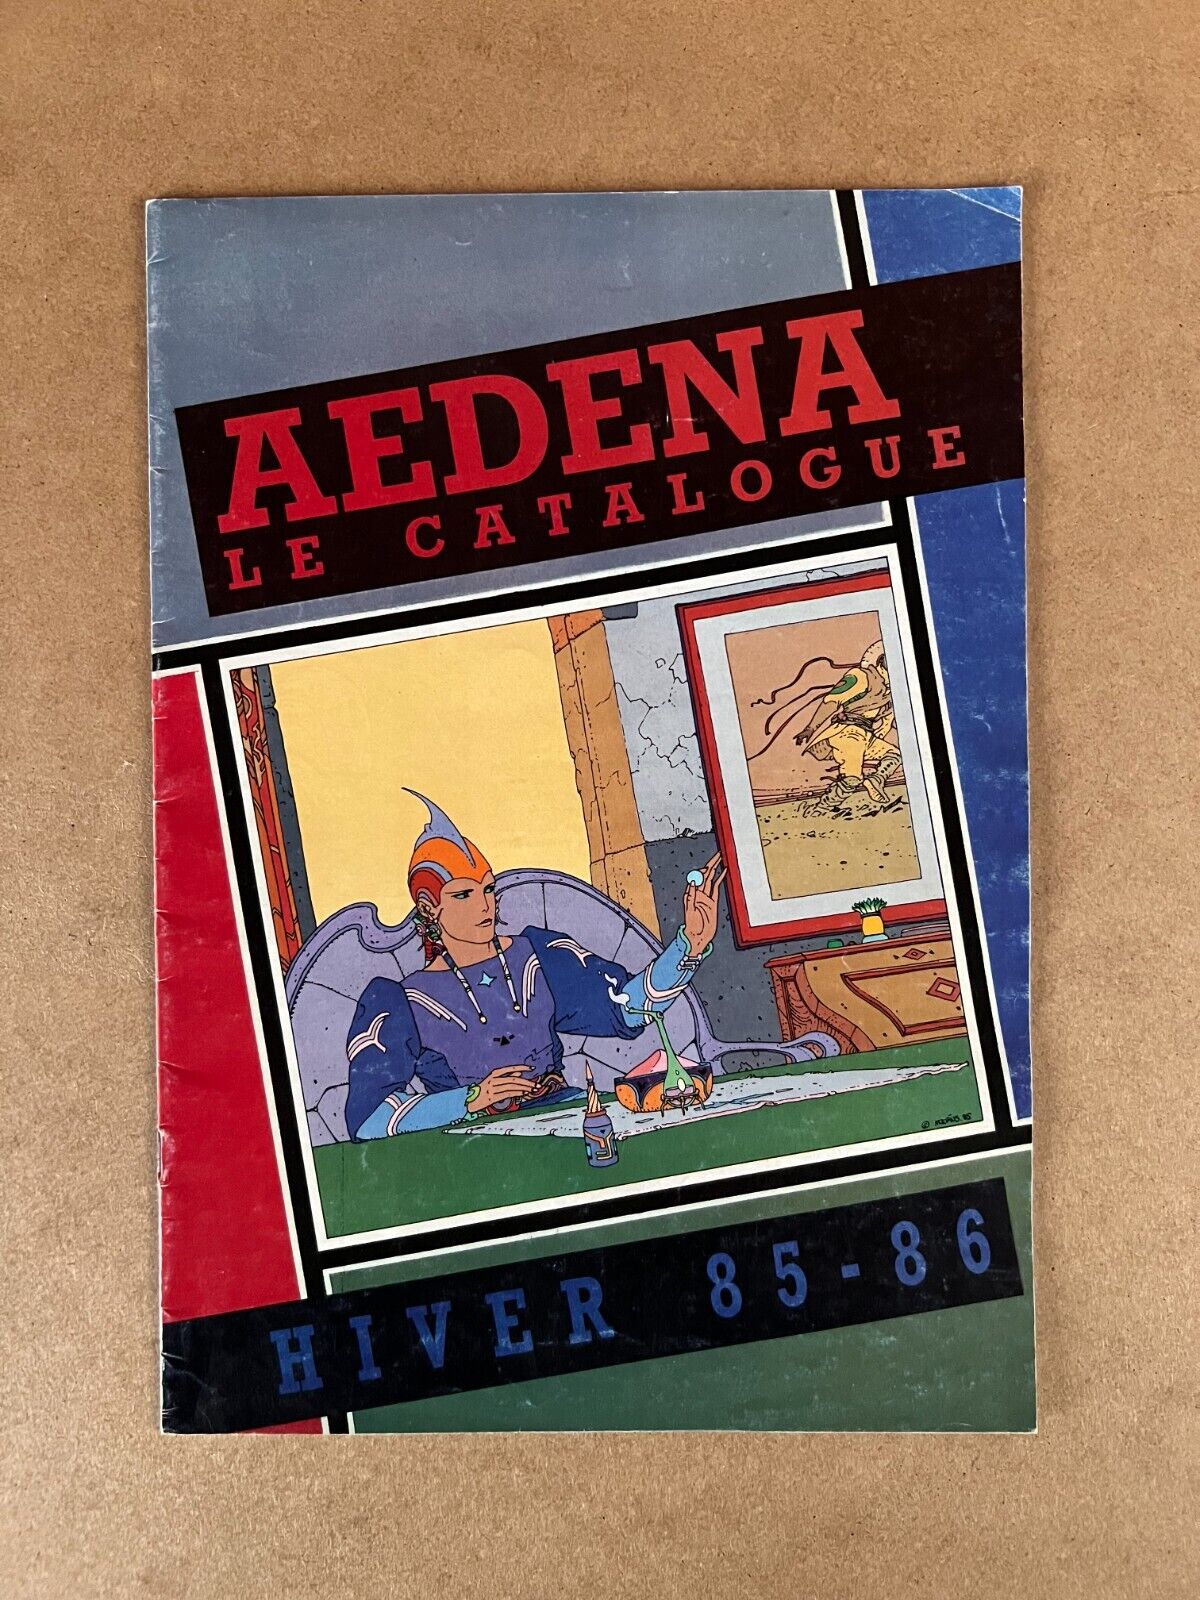 1985 Aedena Catalogue Moebius Darrow and more  French print